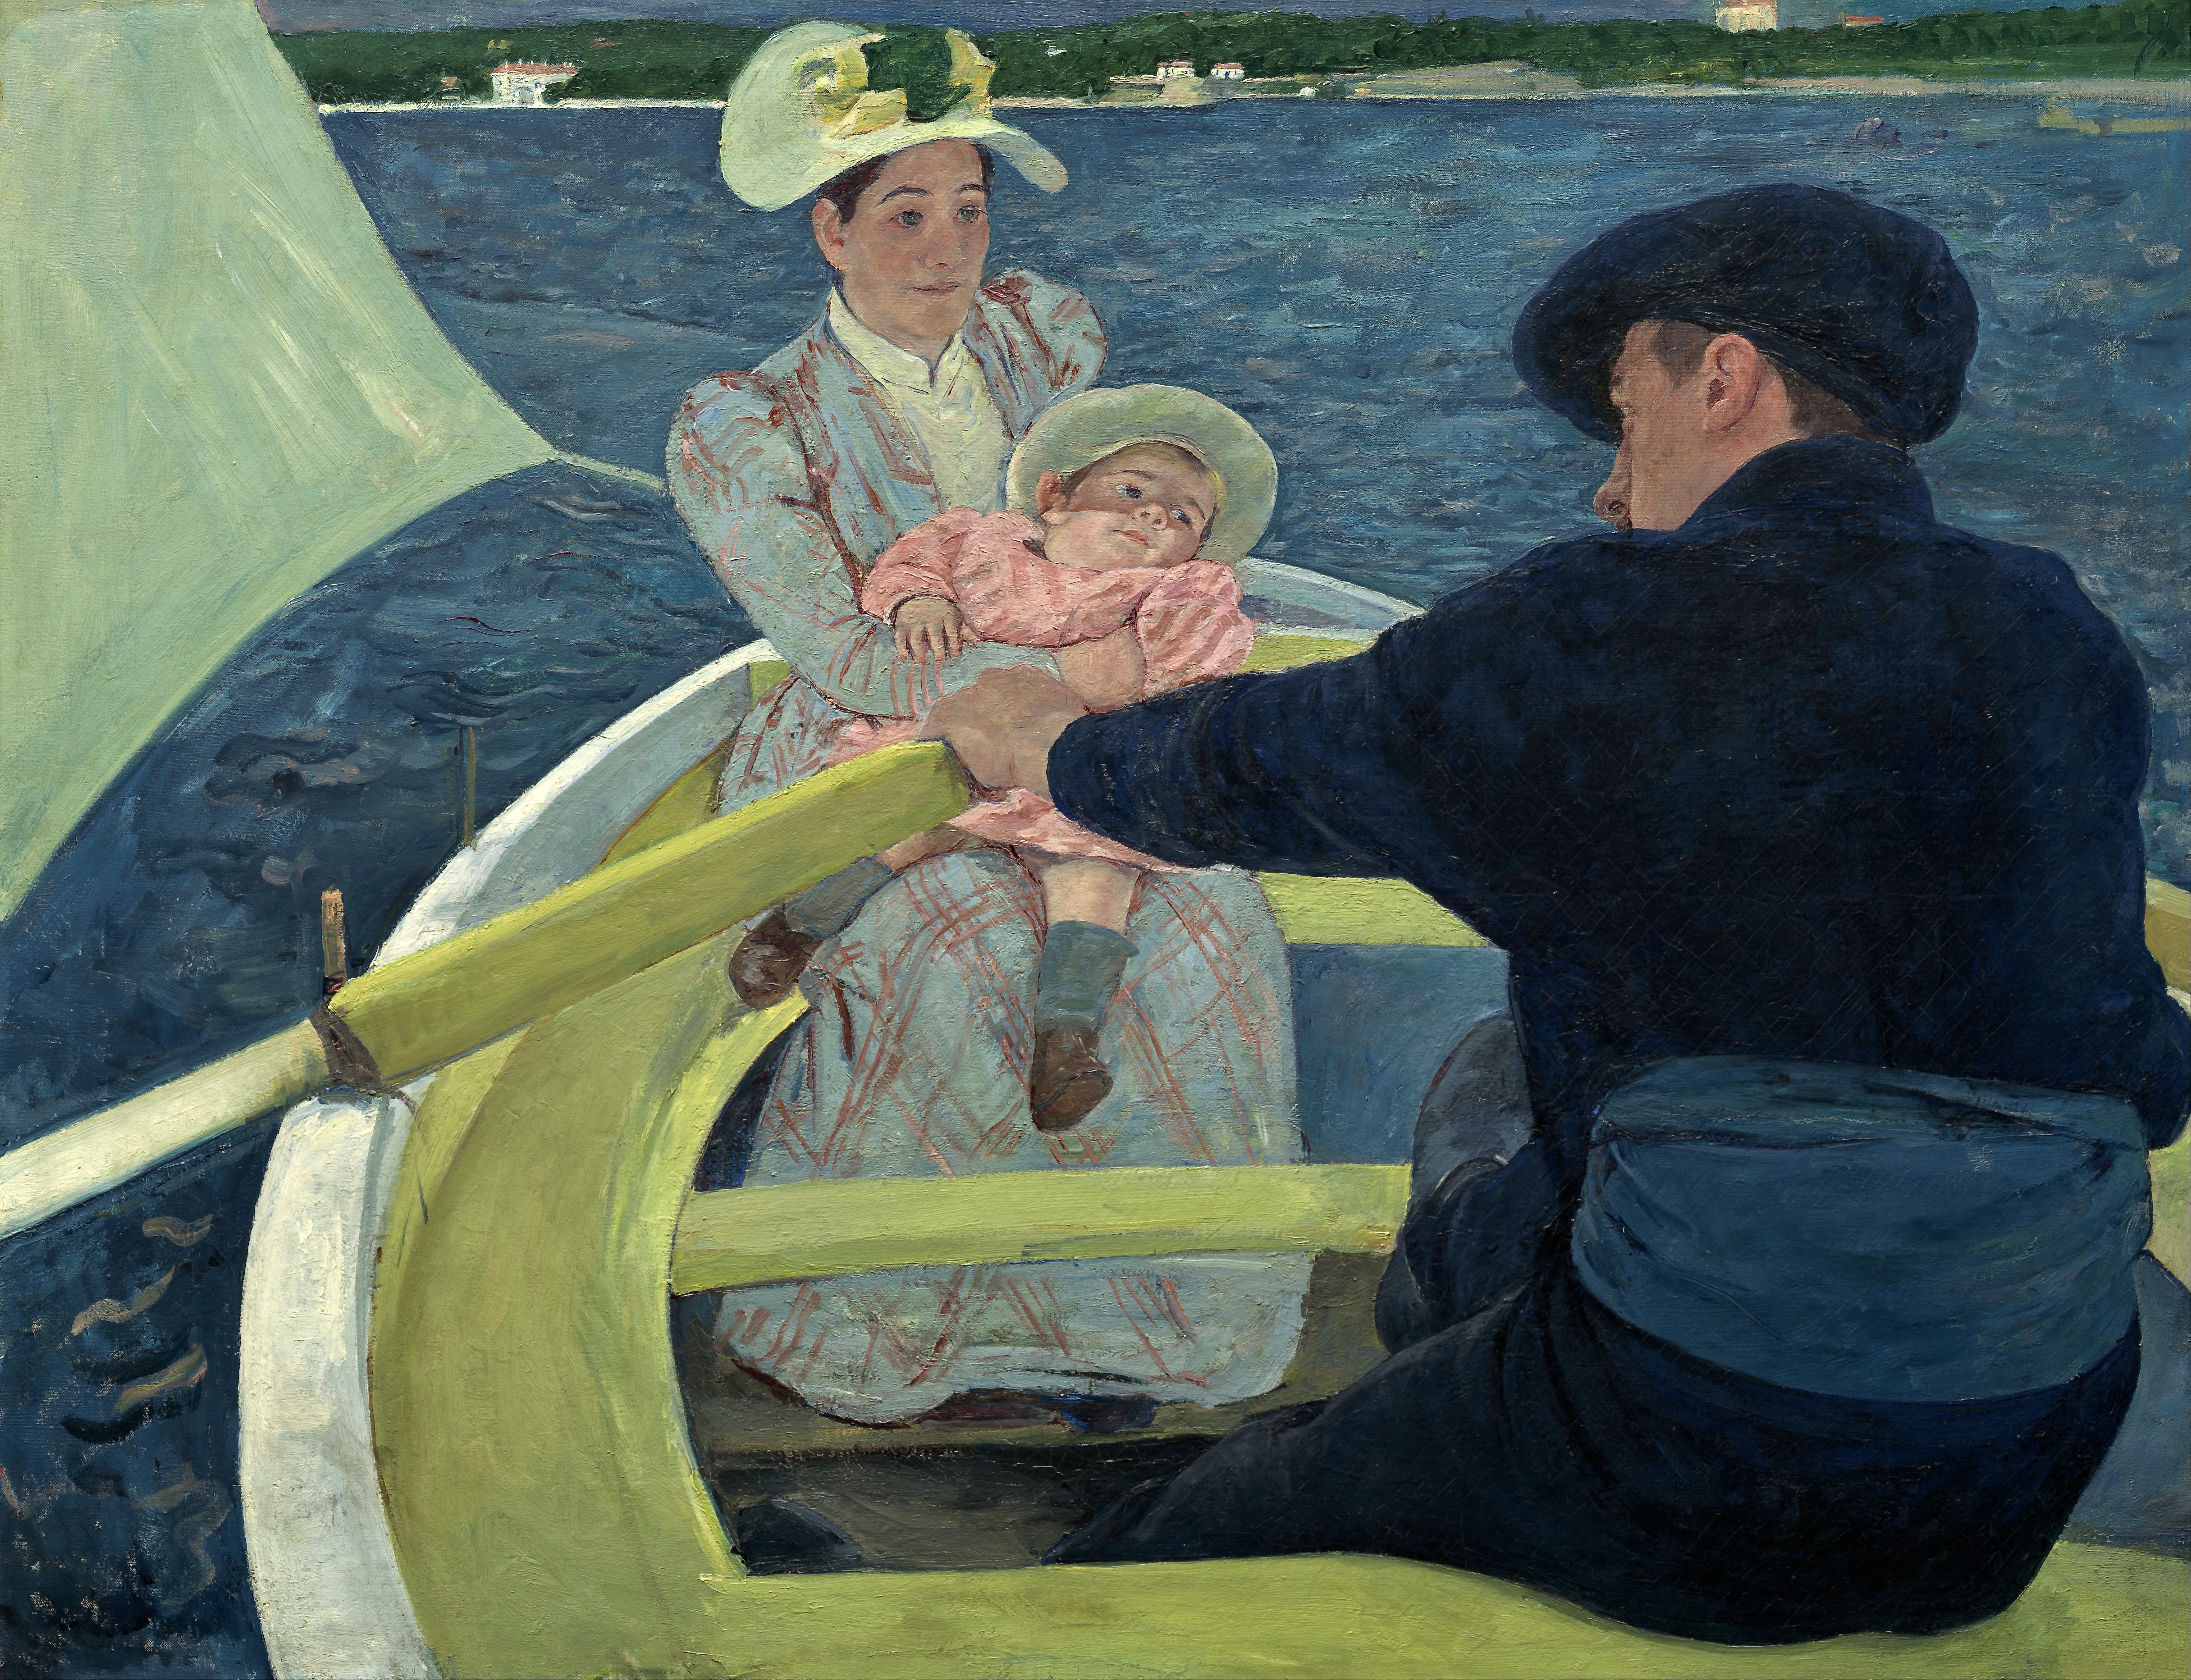 Mary_Cassatt_-_The_Boating_Party_-_Google_Art_Project 2